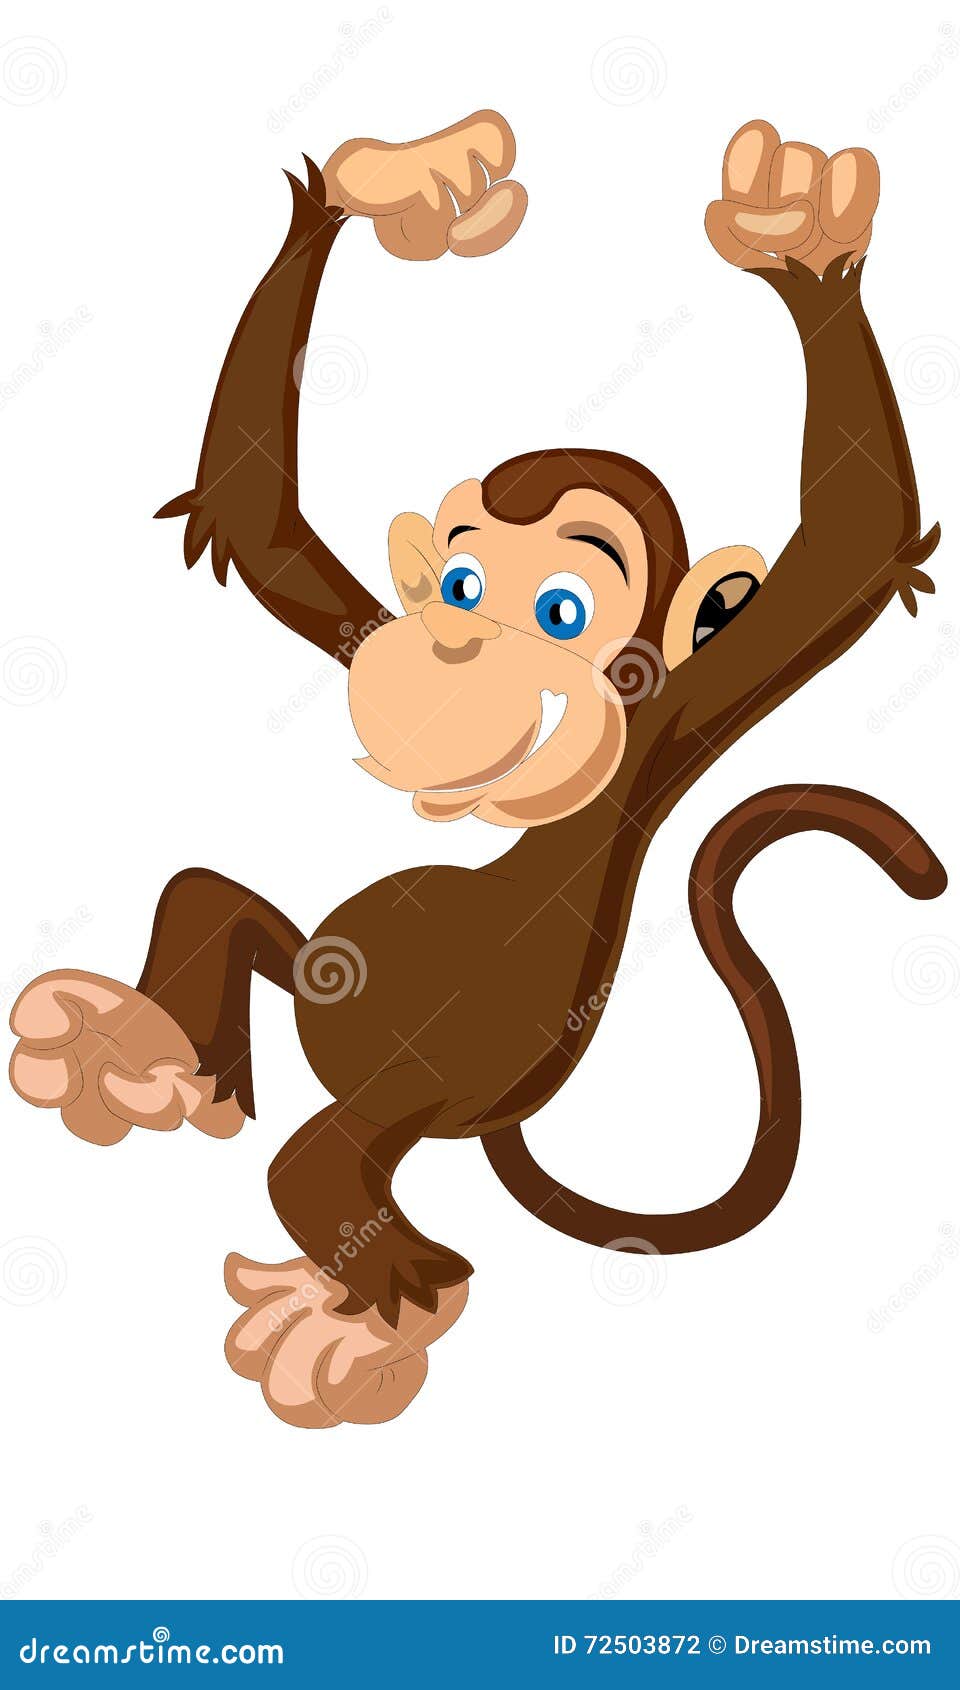 Little Cute Funny Cartoon Brown Monkey Vector Stock Illustration -  Illustration of little, friendship: 72503872